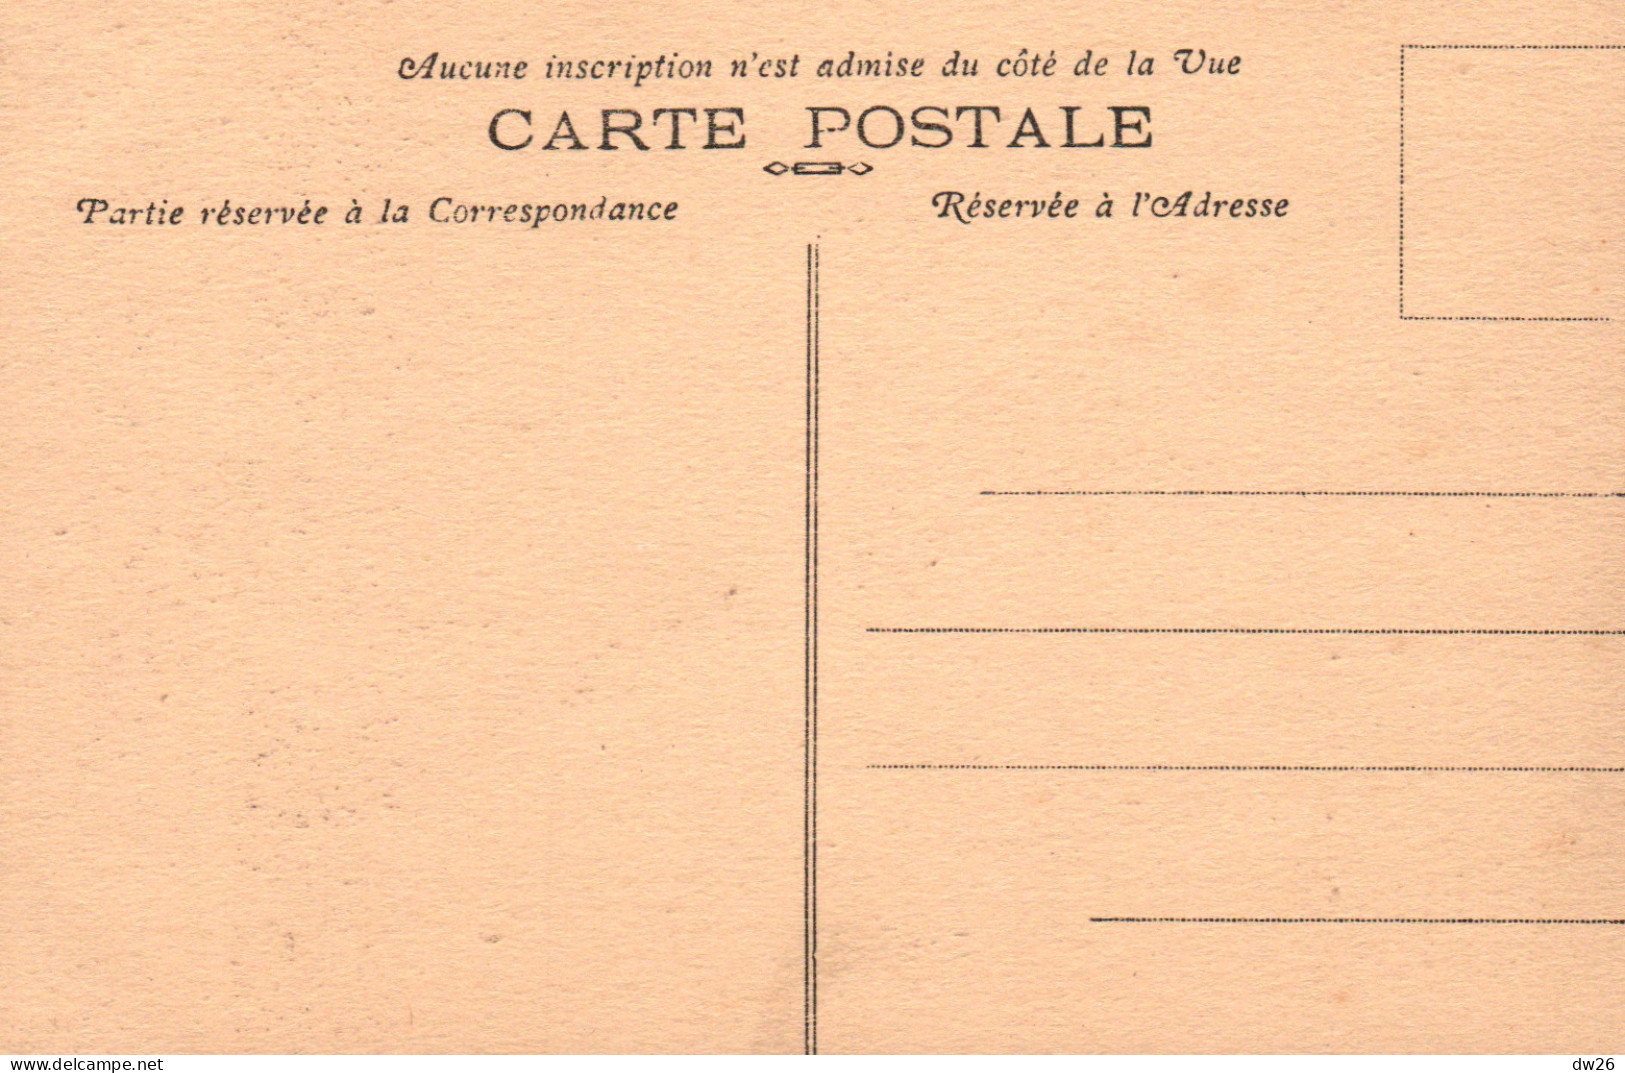 Lagonna-Daoulas (Finistère) Menhir De Rungléo, Croix De Pierre - Collection Hamonic - Carte N° 2898 Non Circulée - Daoulas